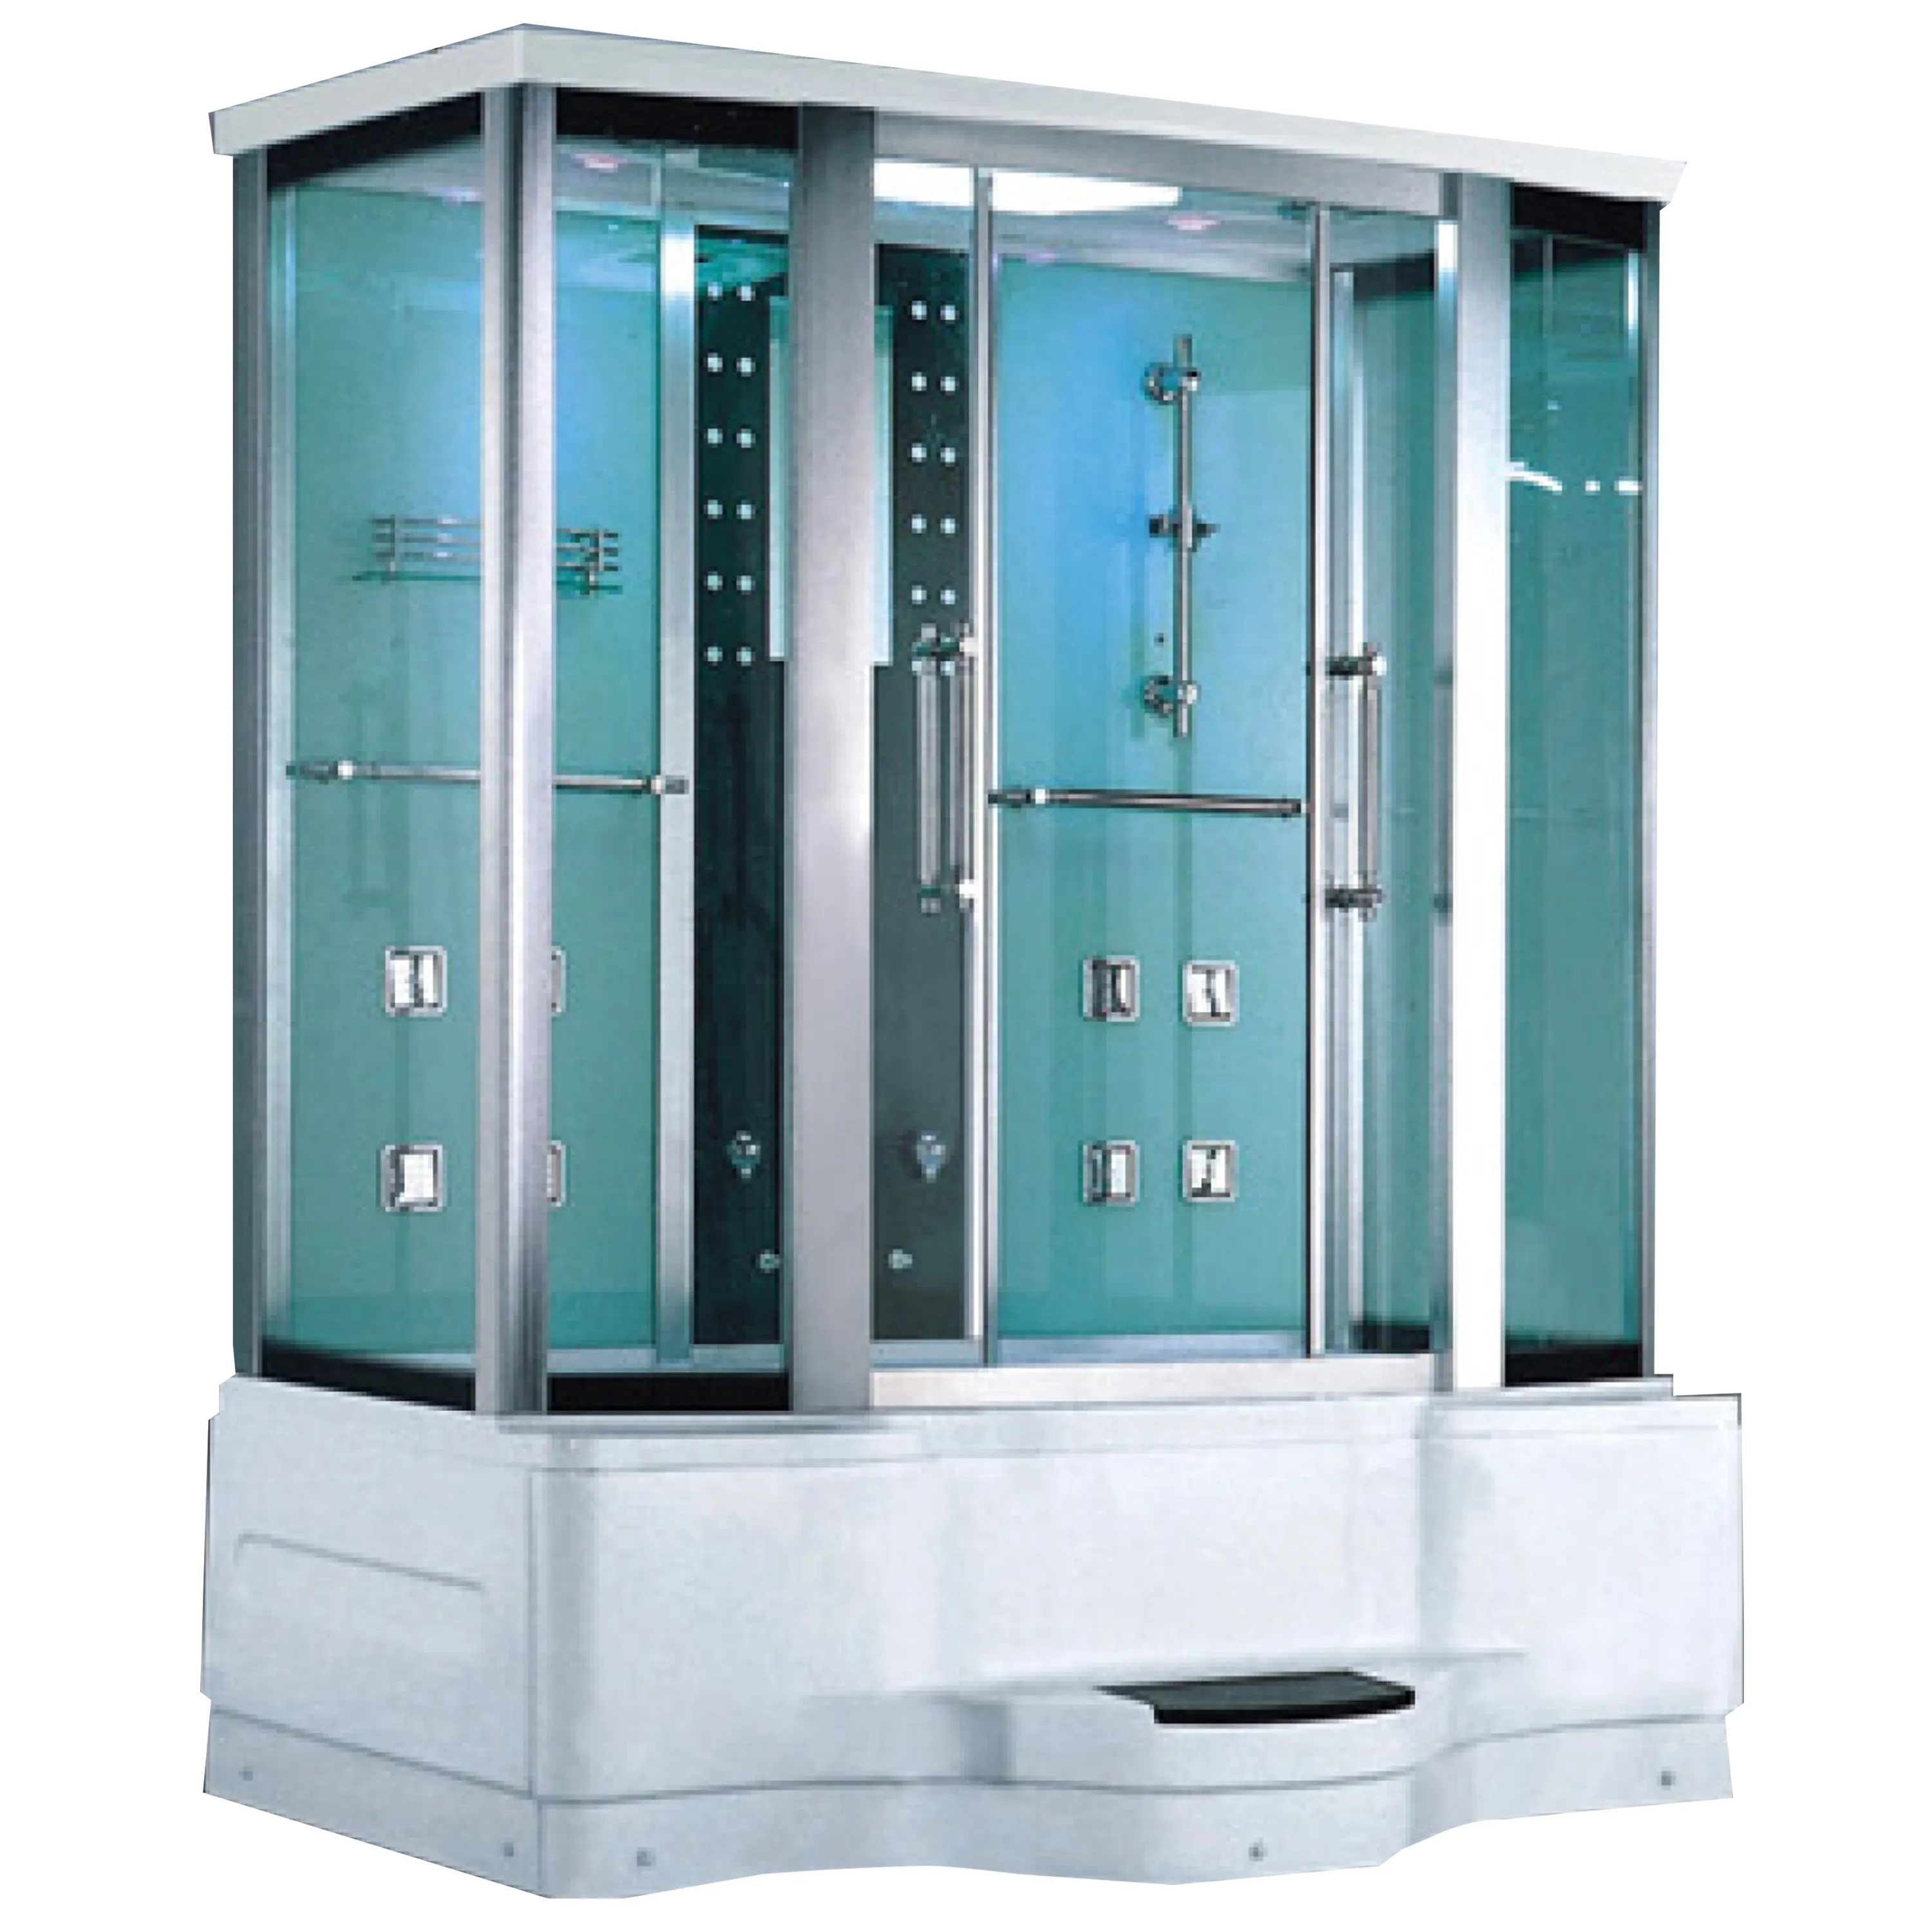 Enclosed indoor modern hydromassage bathtub massage tub whirlpool nozzle system home cabinet shower steam bath room